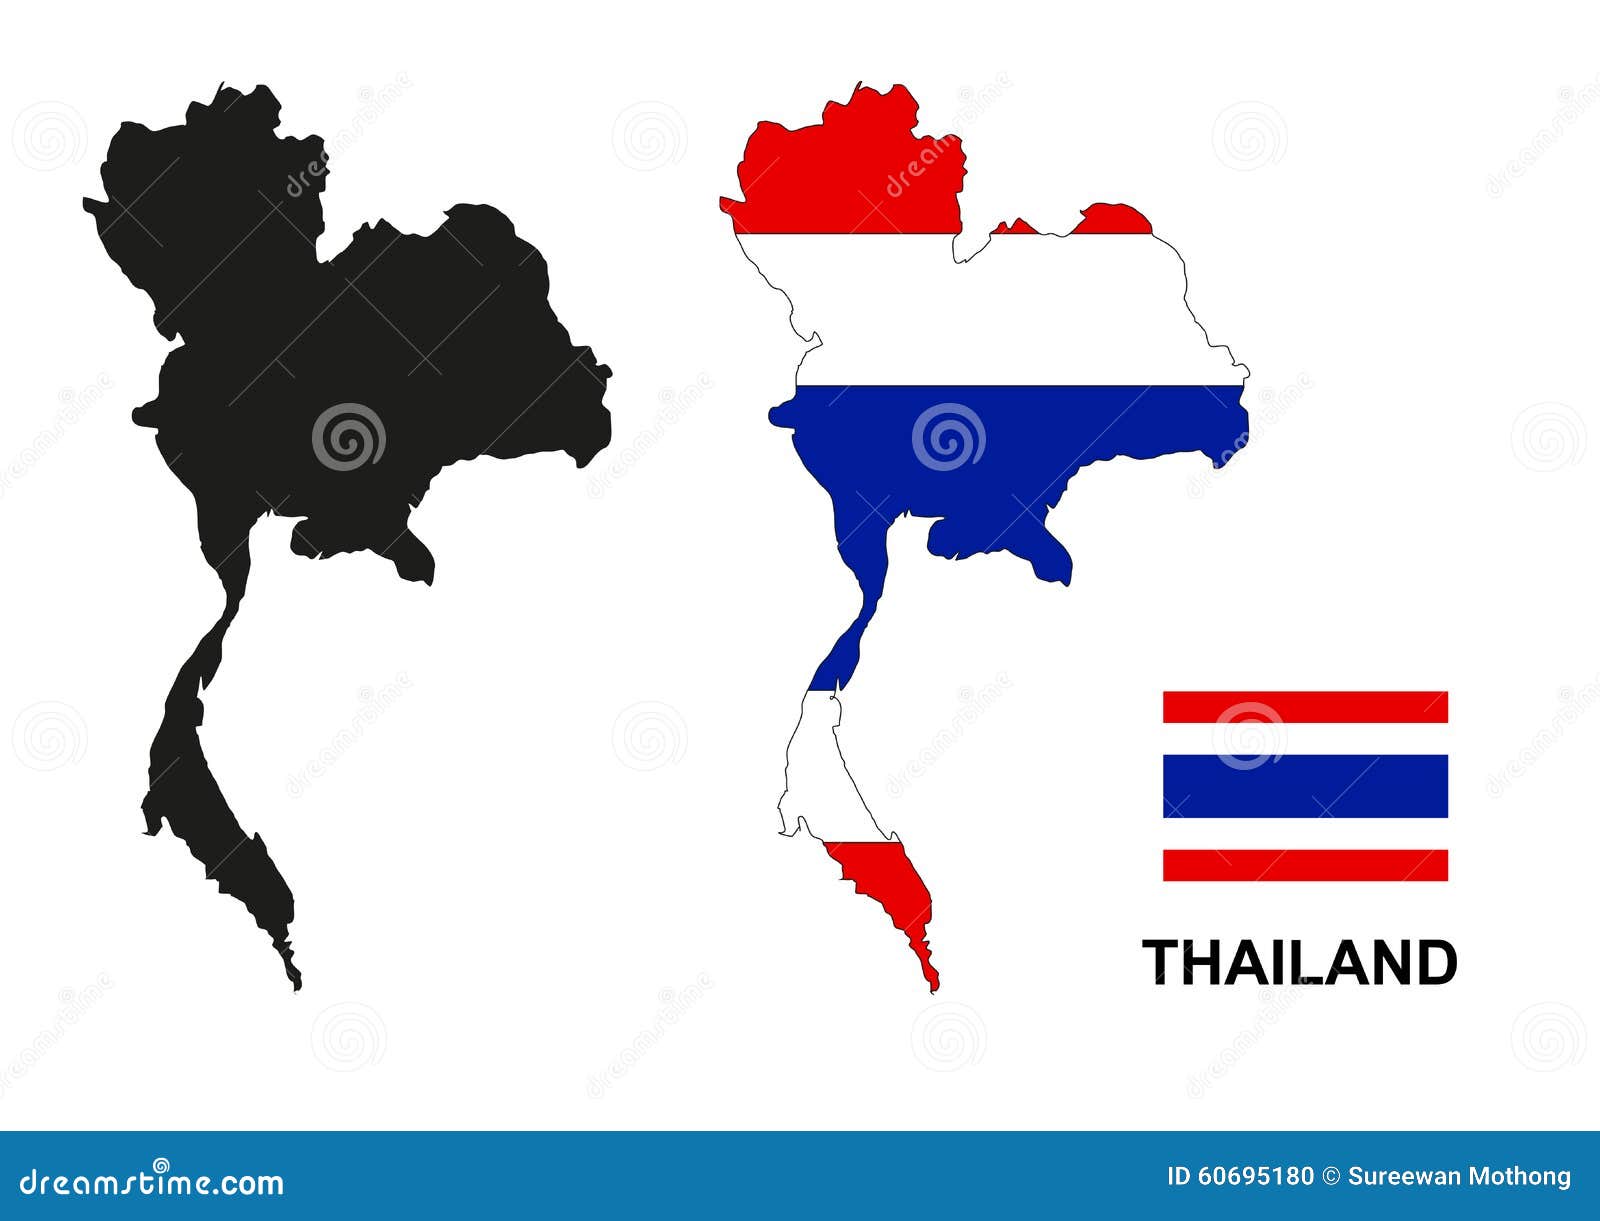 clipart thailand map - photo #27